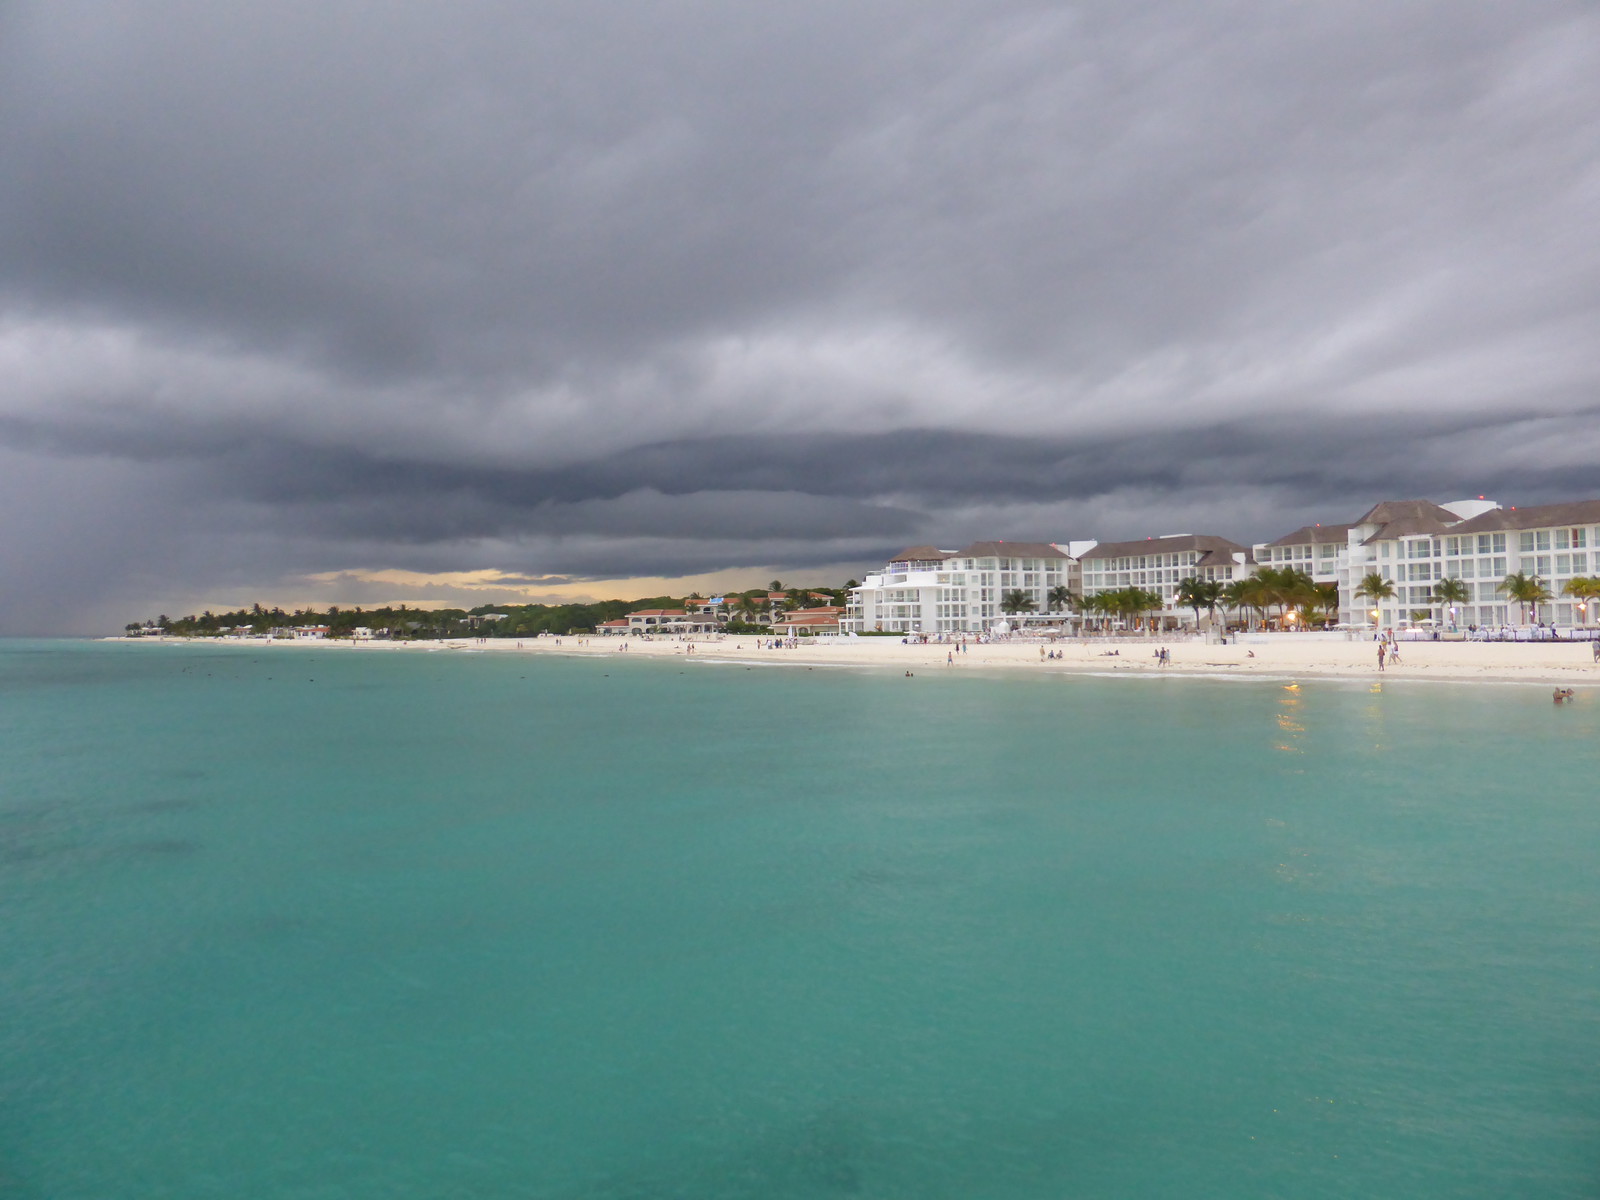 Storm clouds gathering over Playa del Carmen